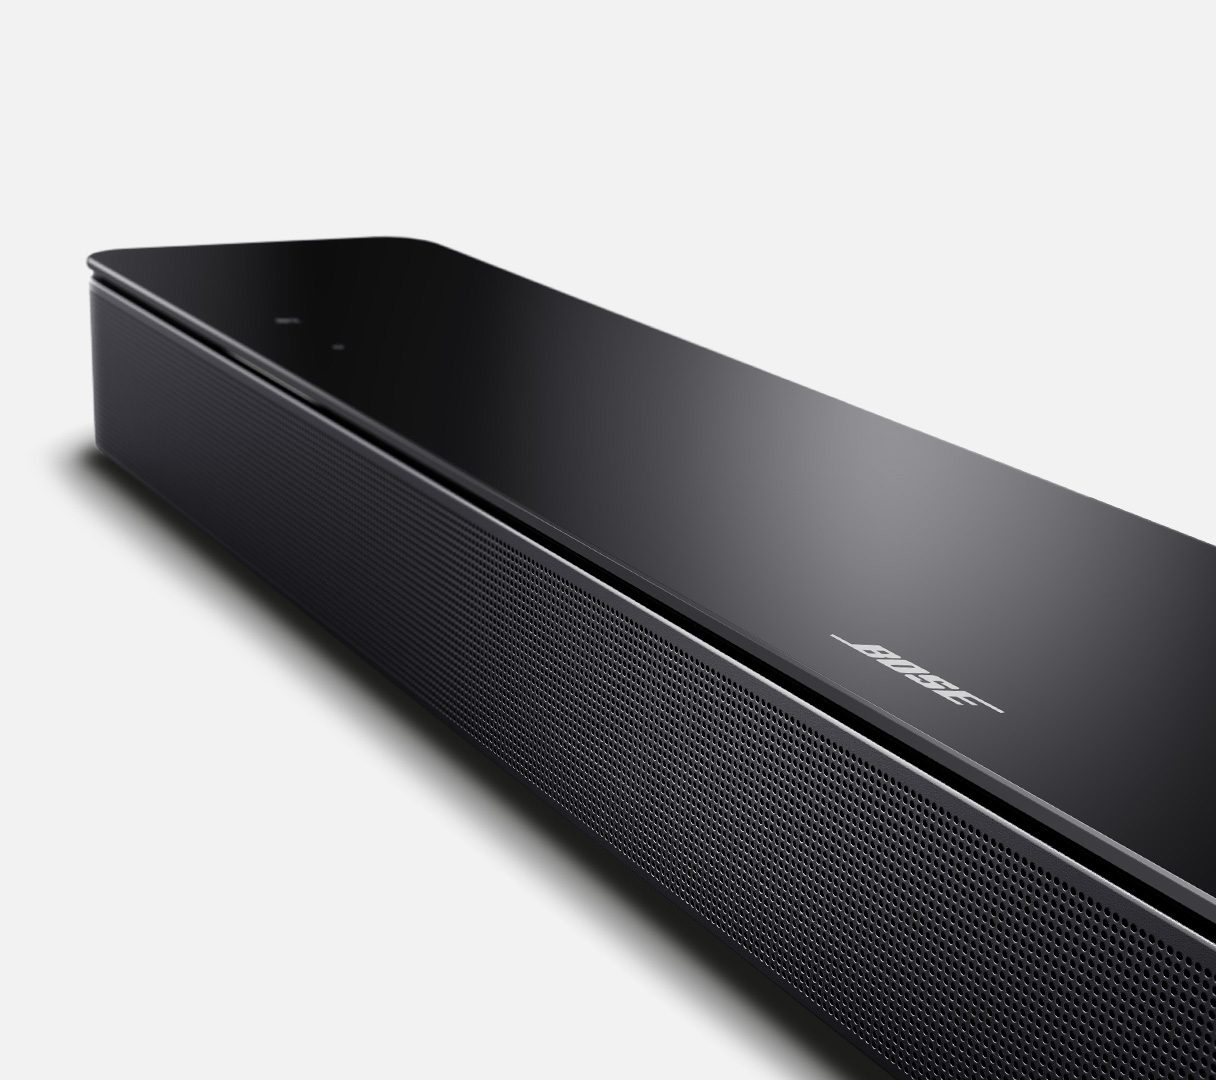 Bose Smart Soundbar 300 | Bose